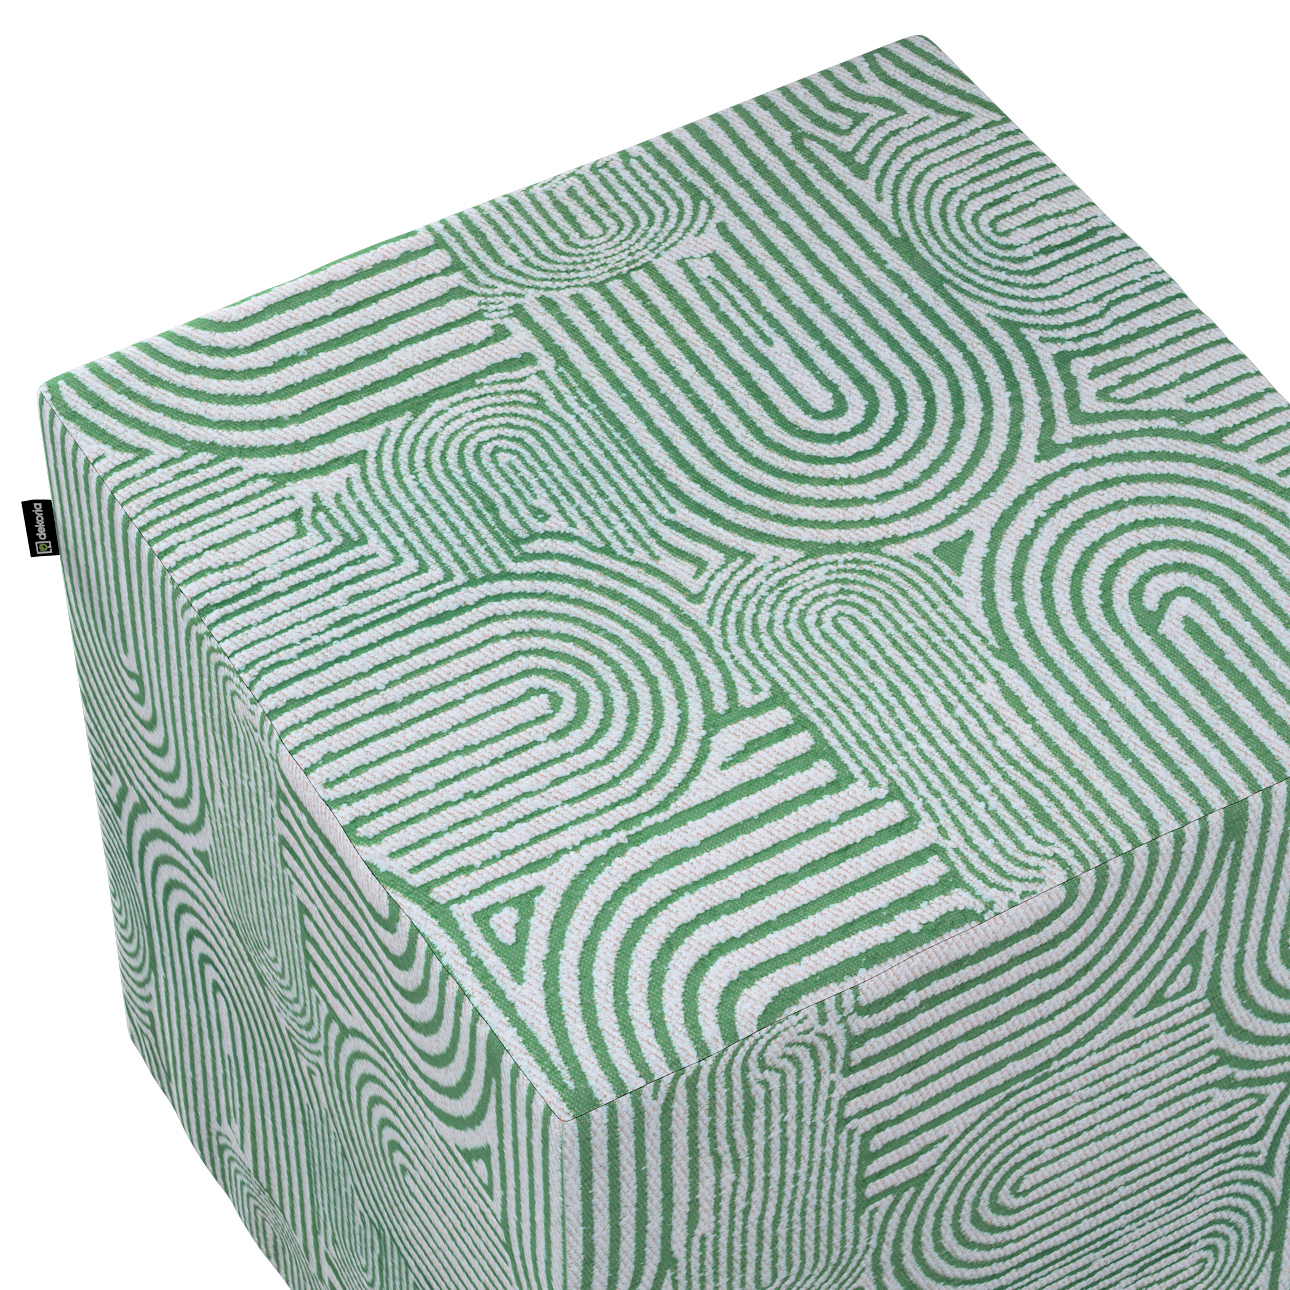 Sitzwürfel, mintgrün-ecru, 40 x 40 x 40 cm, Cosy Home (144-81) günstig online kaufen